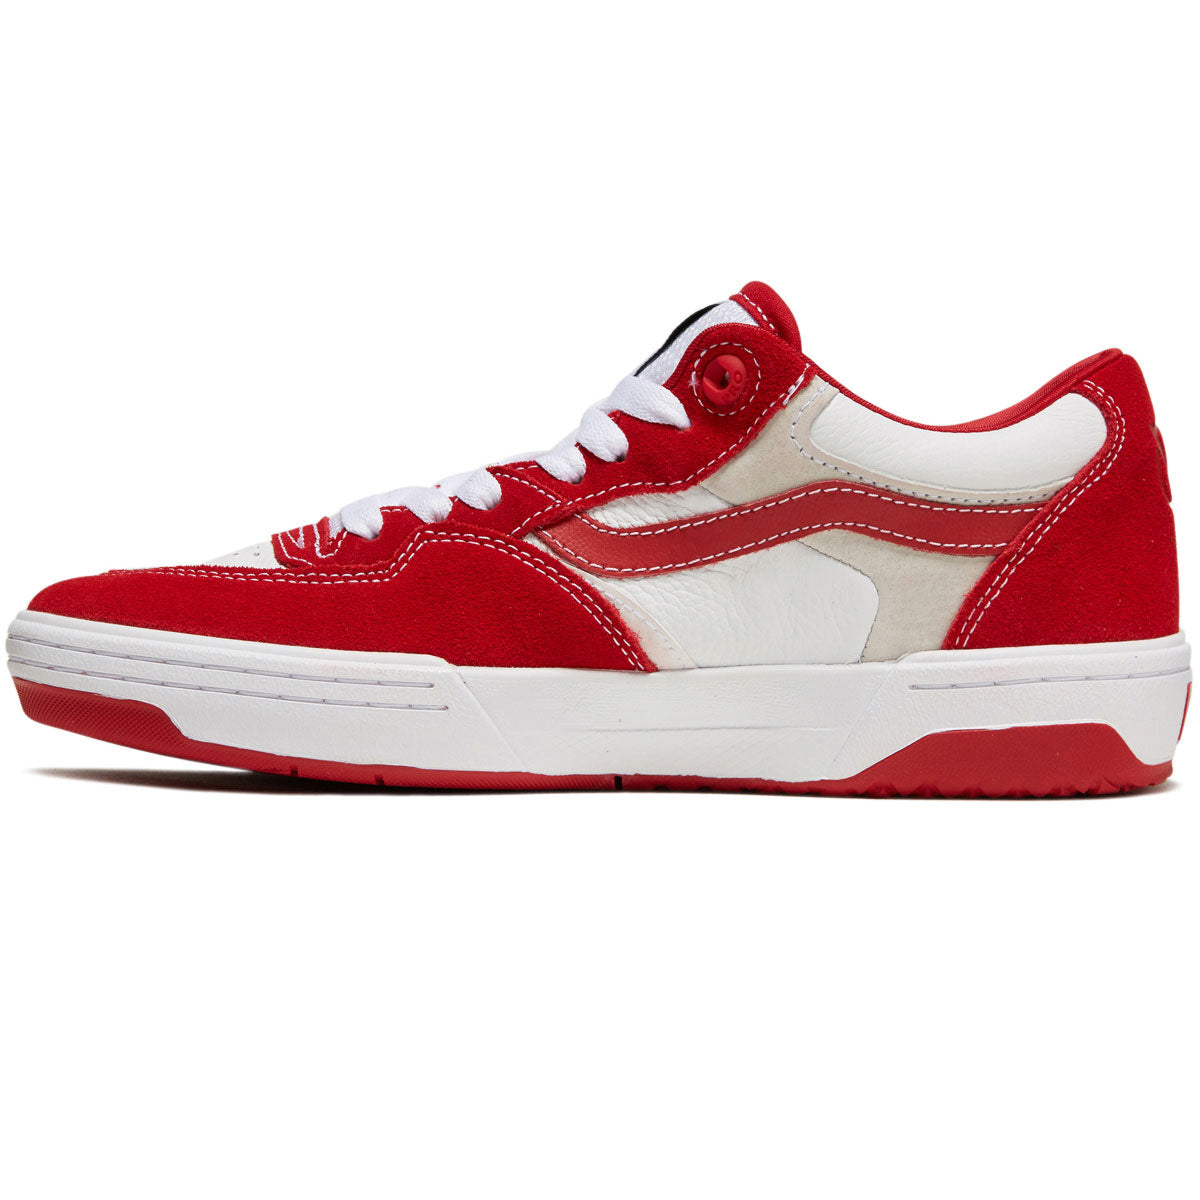 Vans Rowan 2 Shoes - Red/White image 2